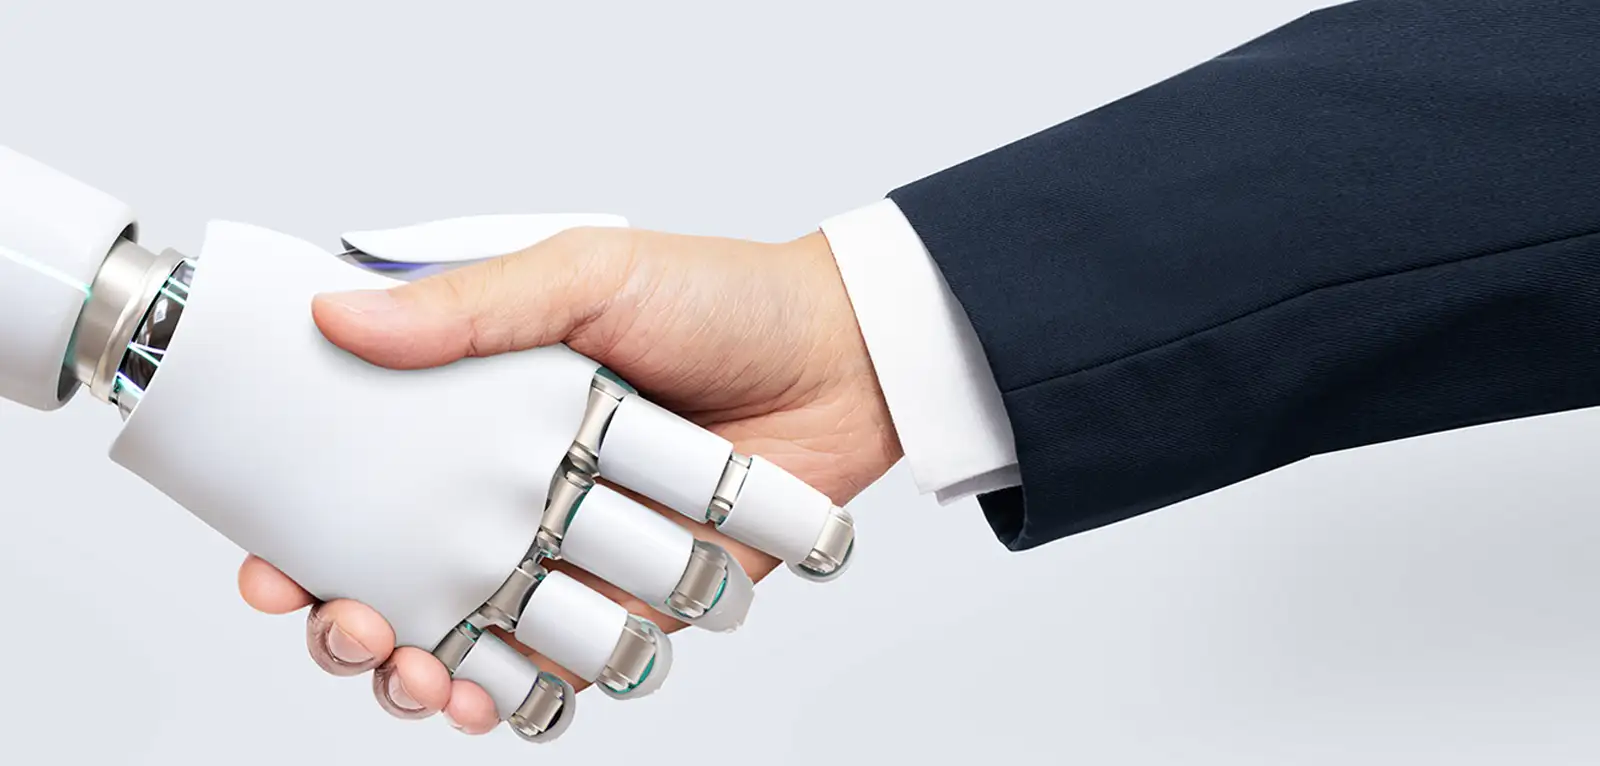 Robotic hand shaking a human hand